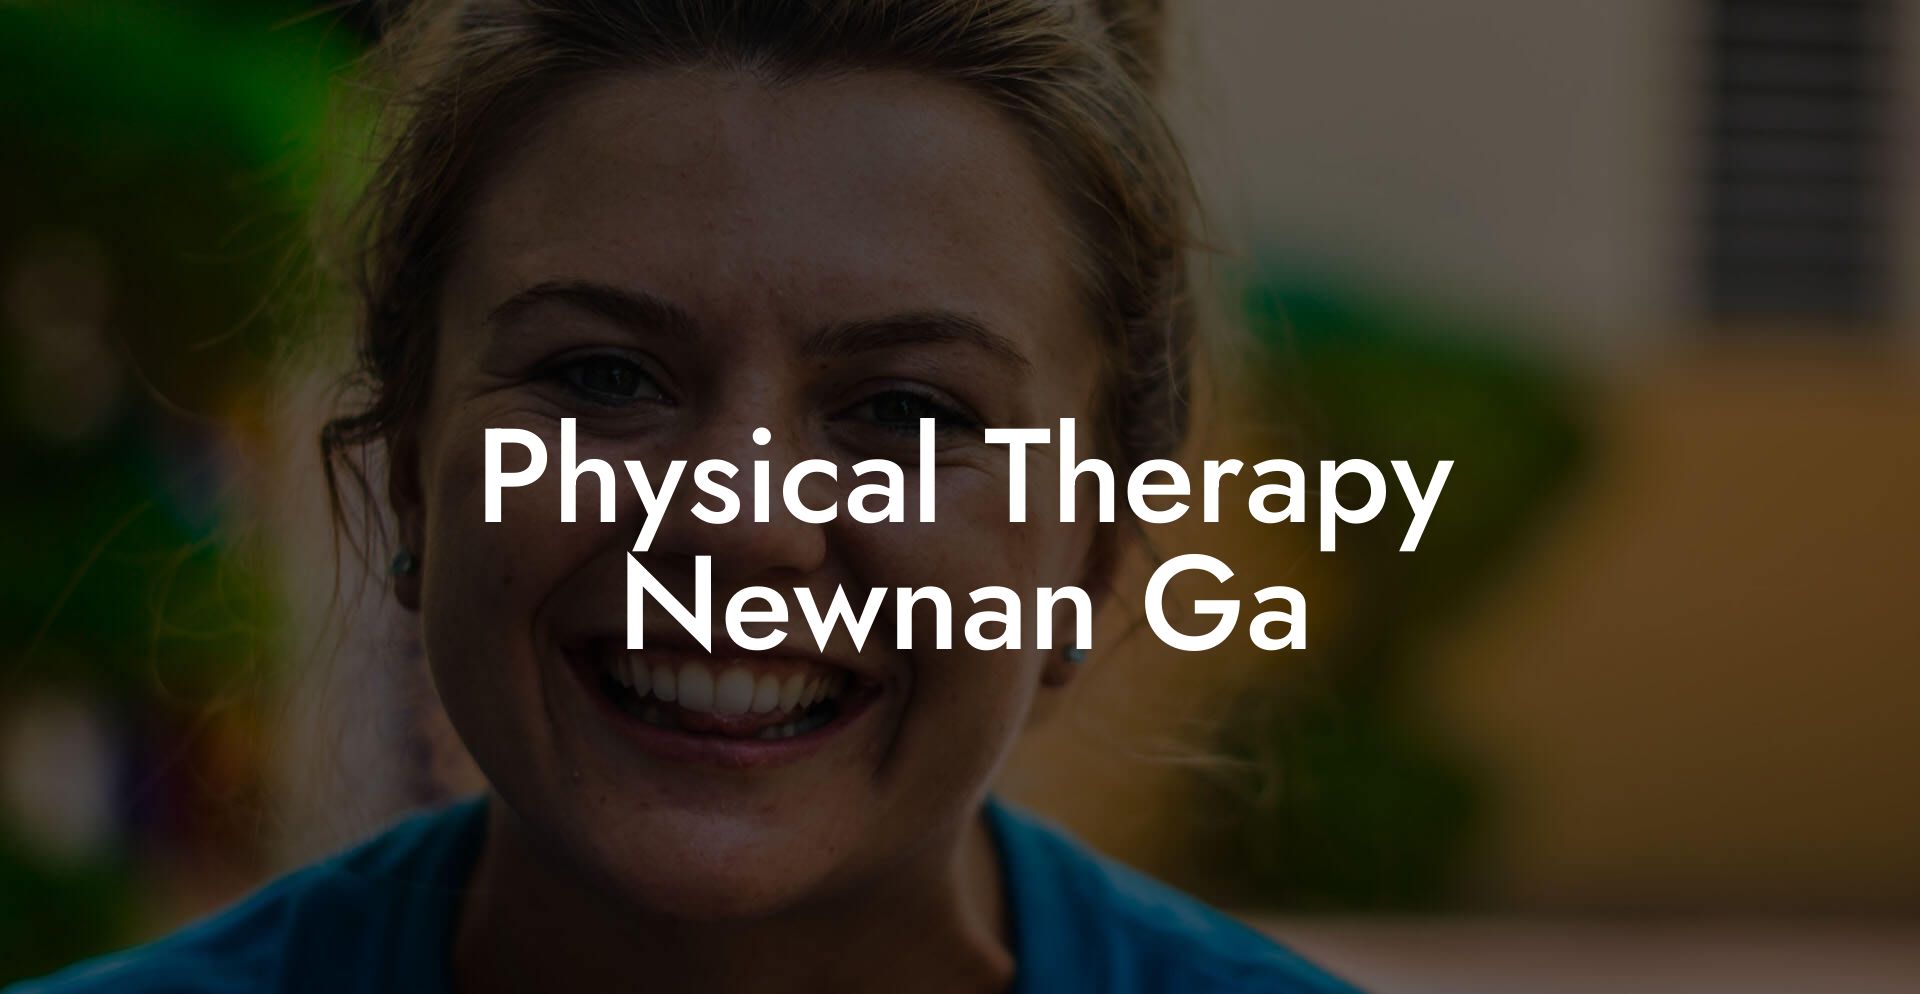 Physical Therapy Newnan Ga